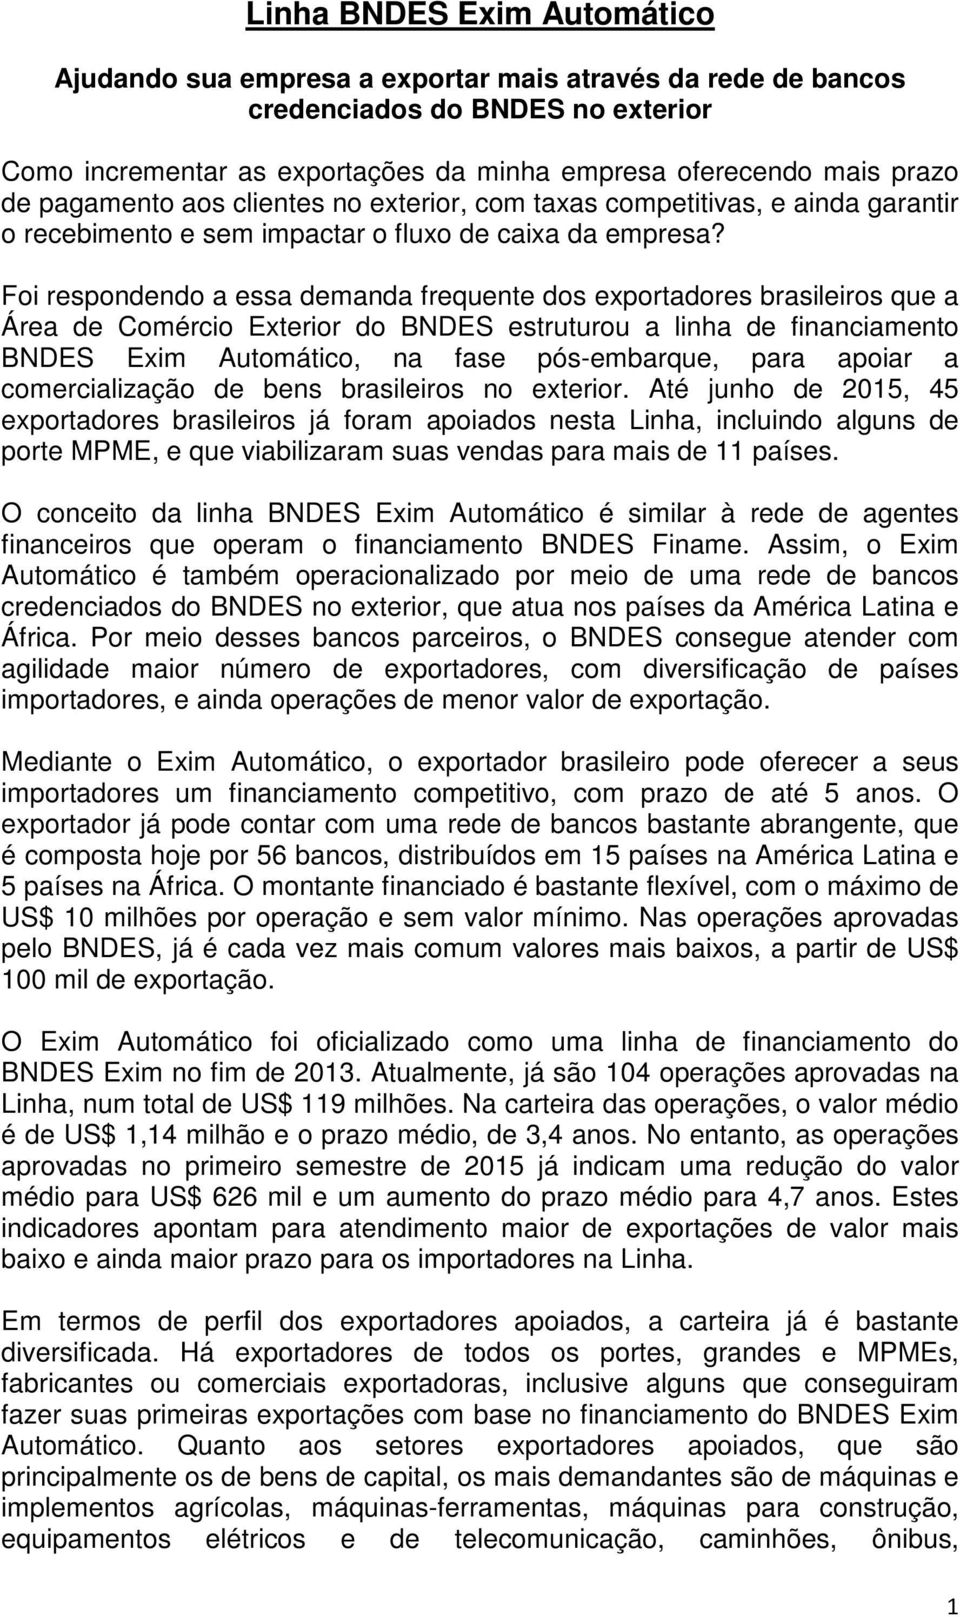 Foi respondendo a essa demanda frequente dos exportadores brasileiros que a Área de Comércio Exterior do BNDES estruturou a linha de financiamento BNDES Exim Automático, na fase pós-embarque, para